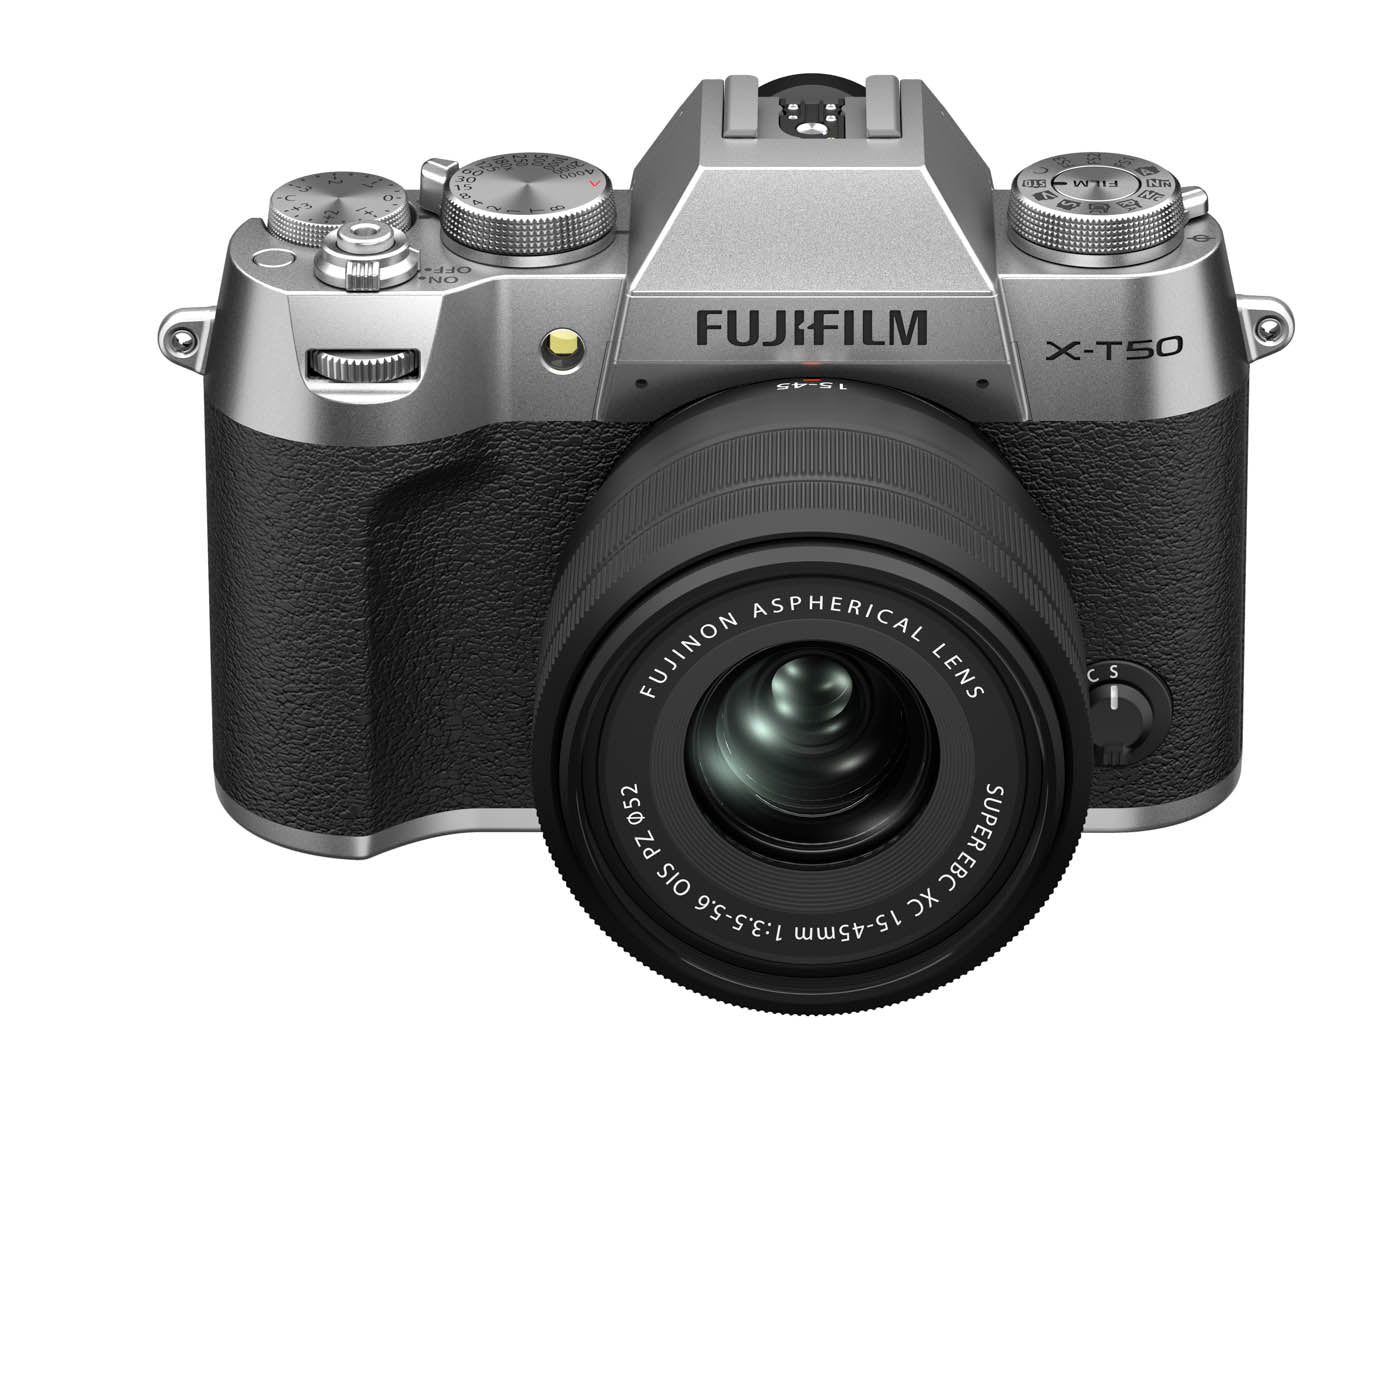 Fujifilm X-T50 Camera with XC 15-45mm F3.5-5.6 OIS PZ Lens - Silver